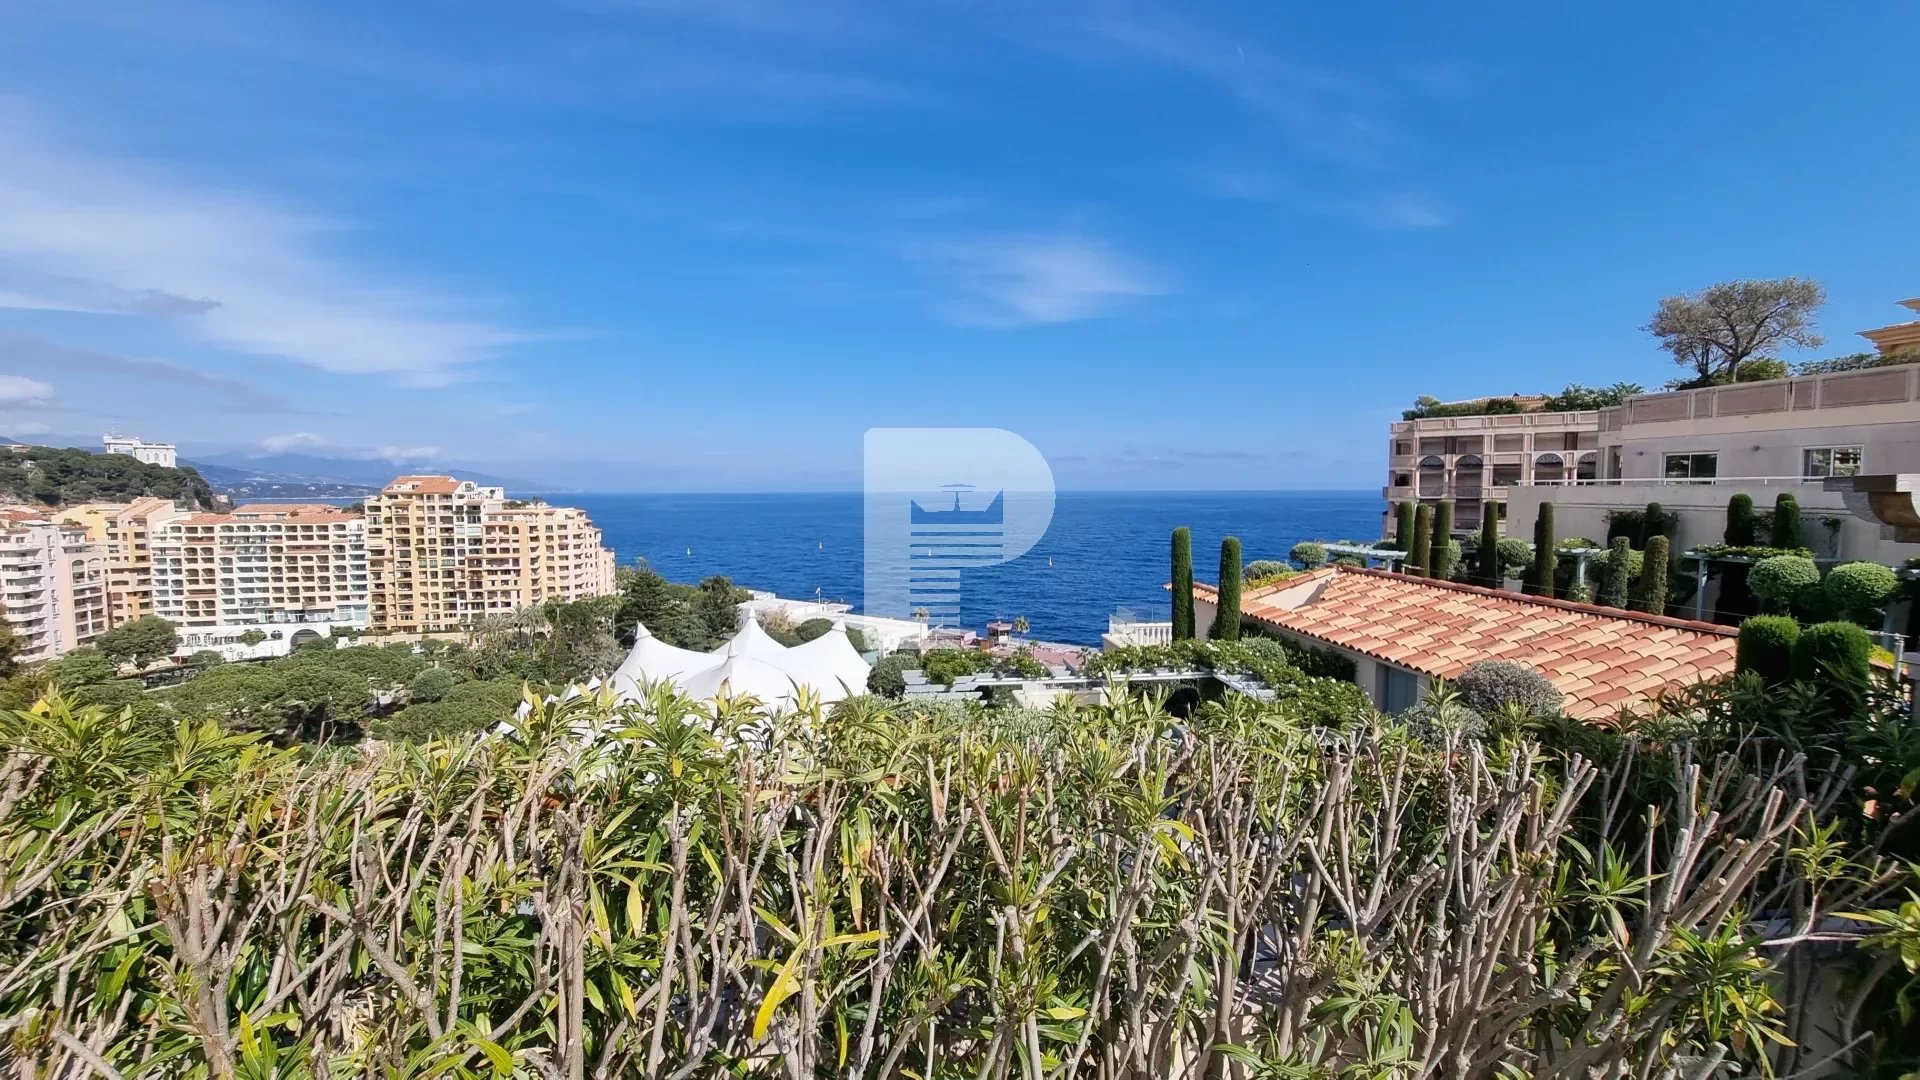 Sale Apartment - Monaco - Monaco